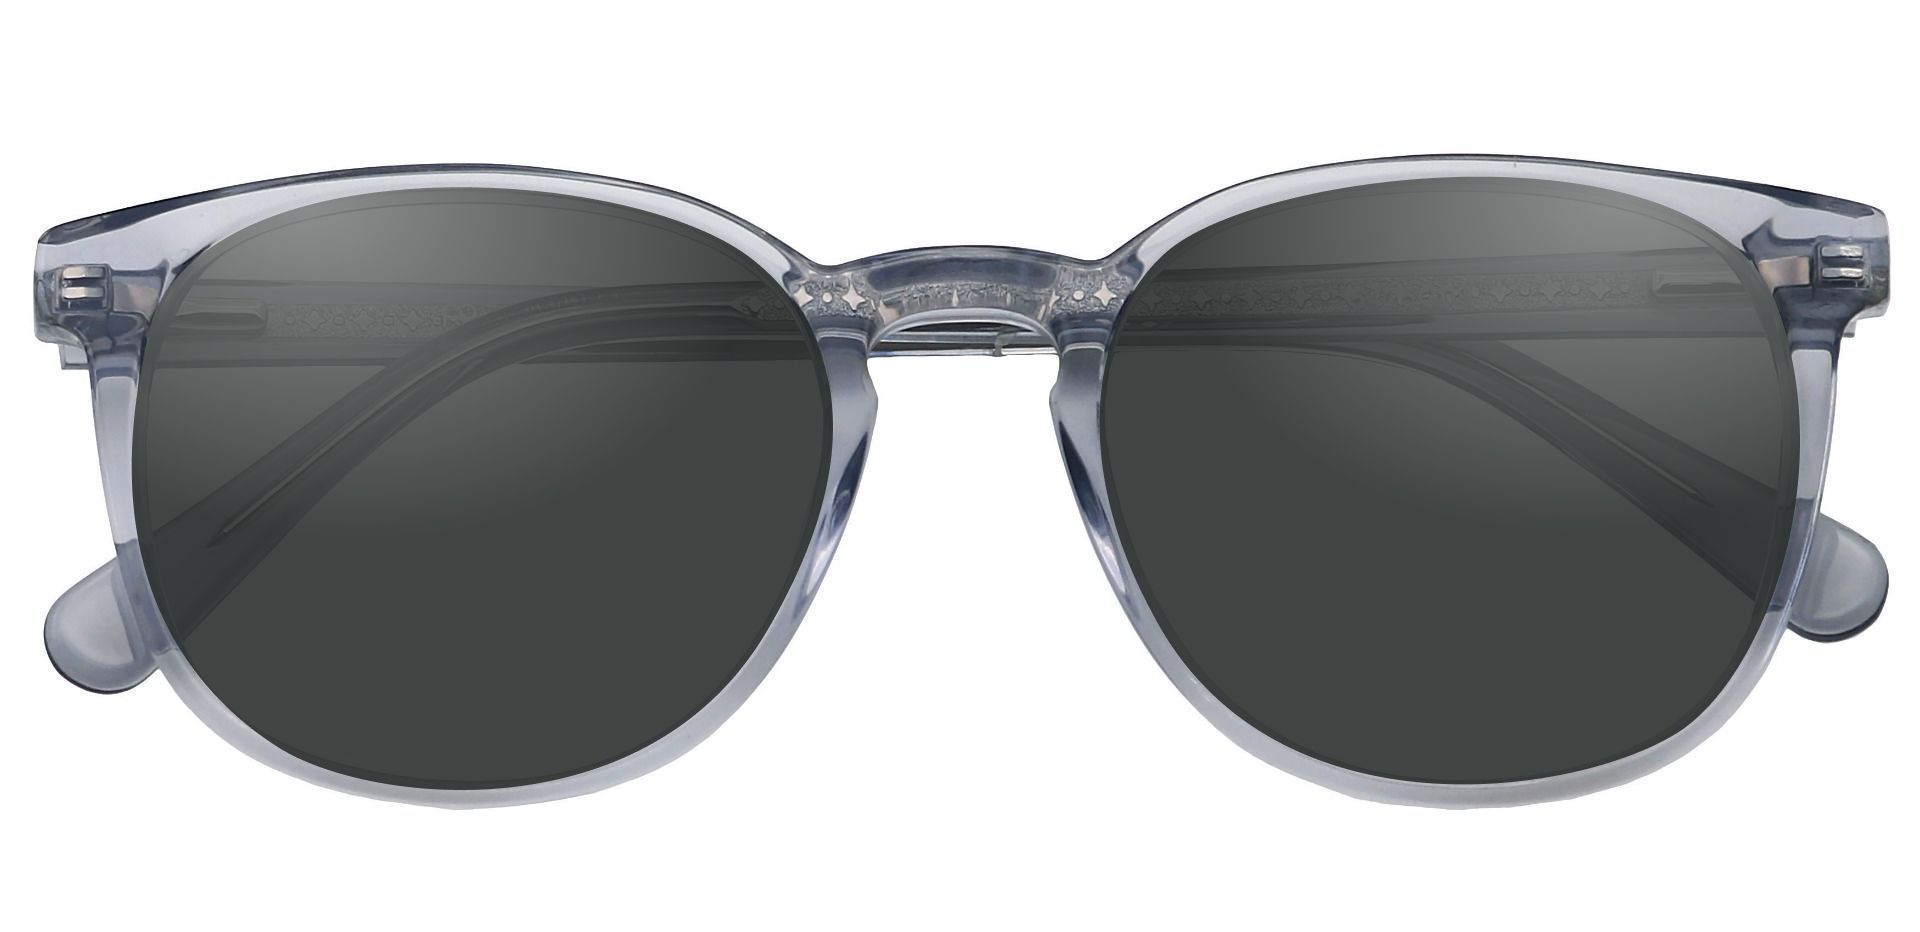 Nebula Round Prescription Sunglasses - Gray Frame With Gray Lenses